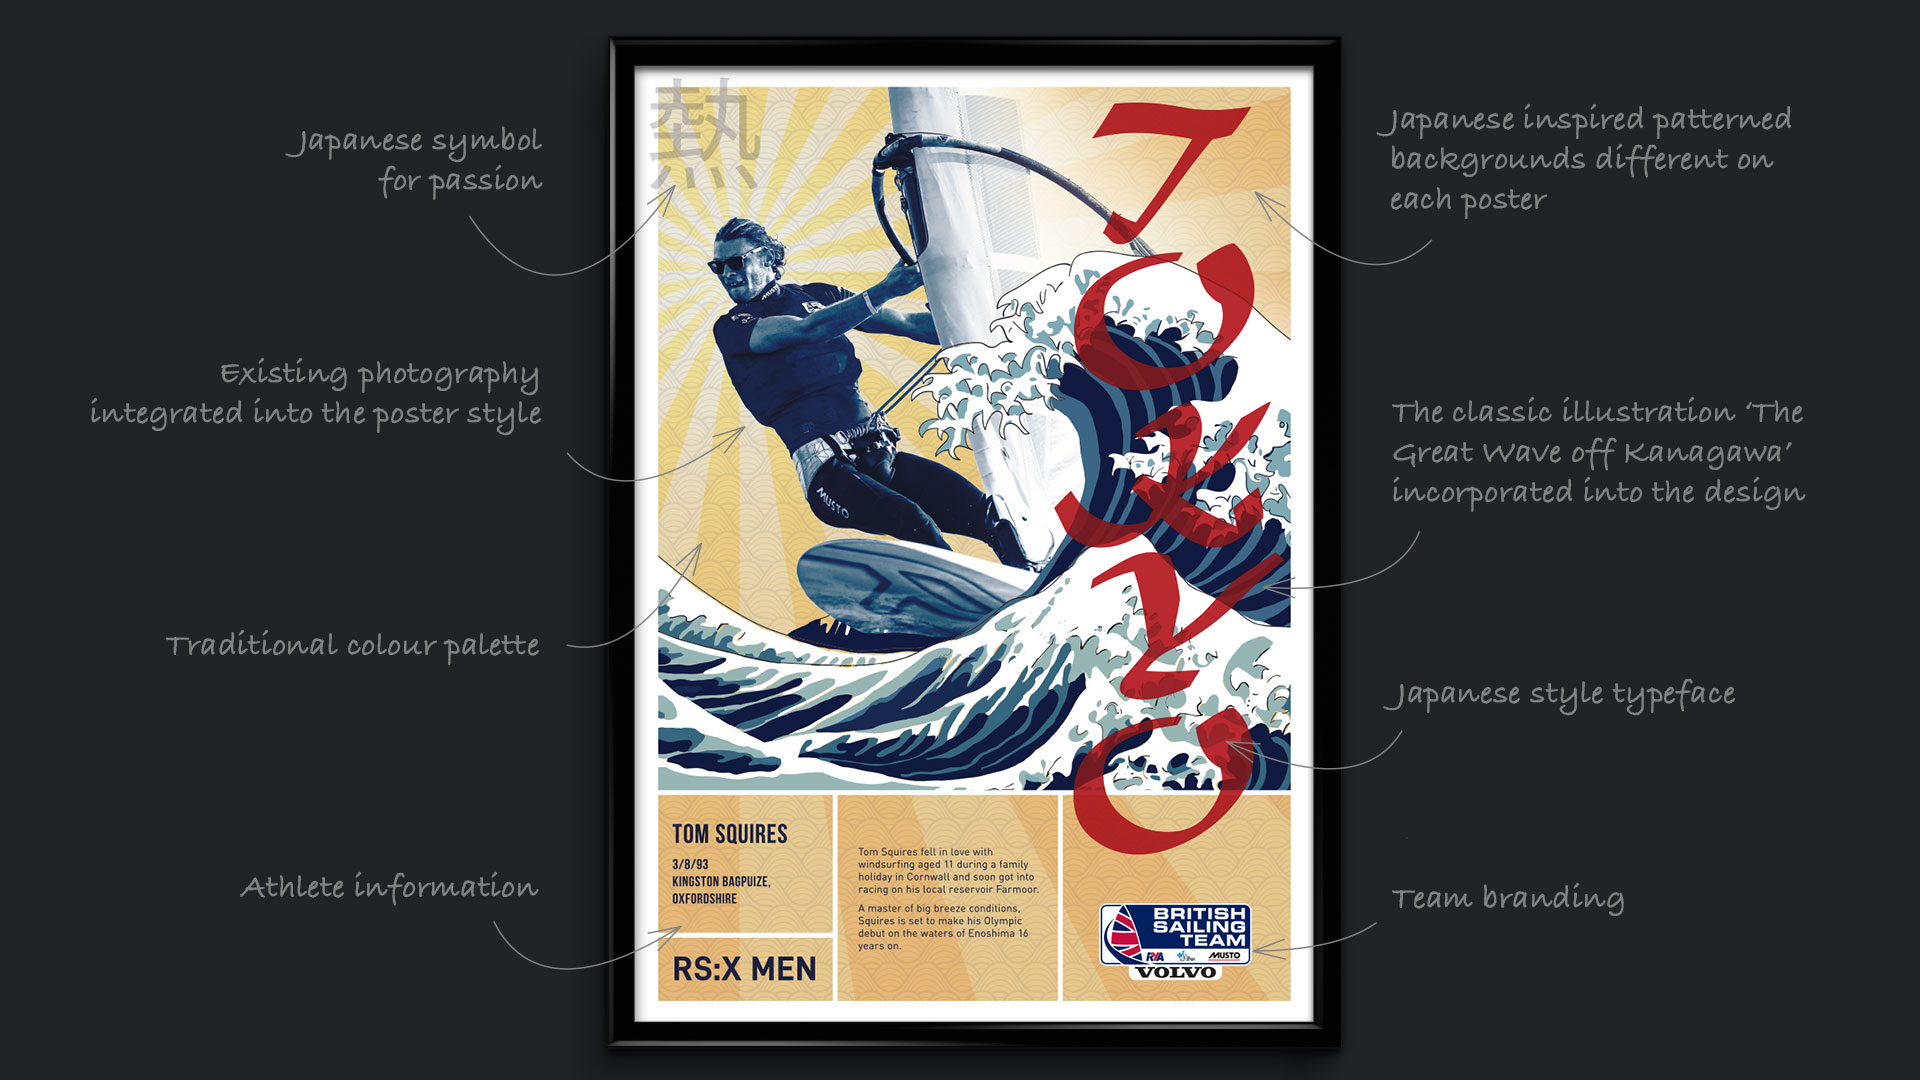 The British Sailing Team - Tokyo Olympics poster